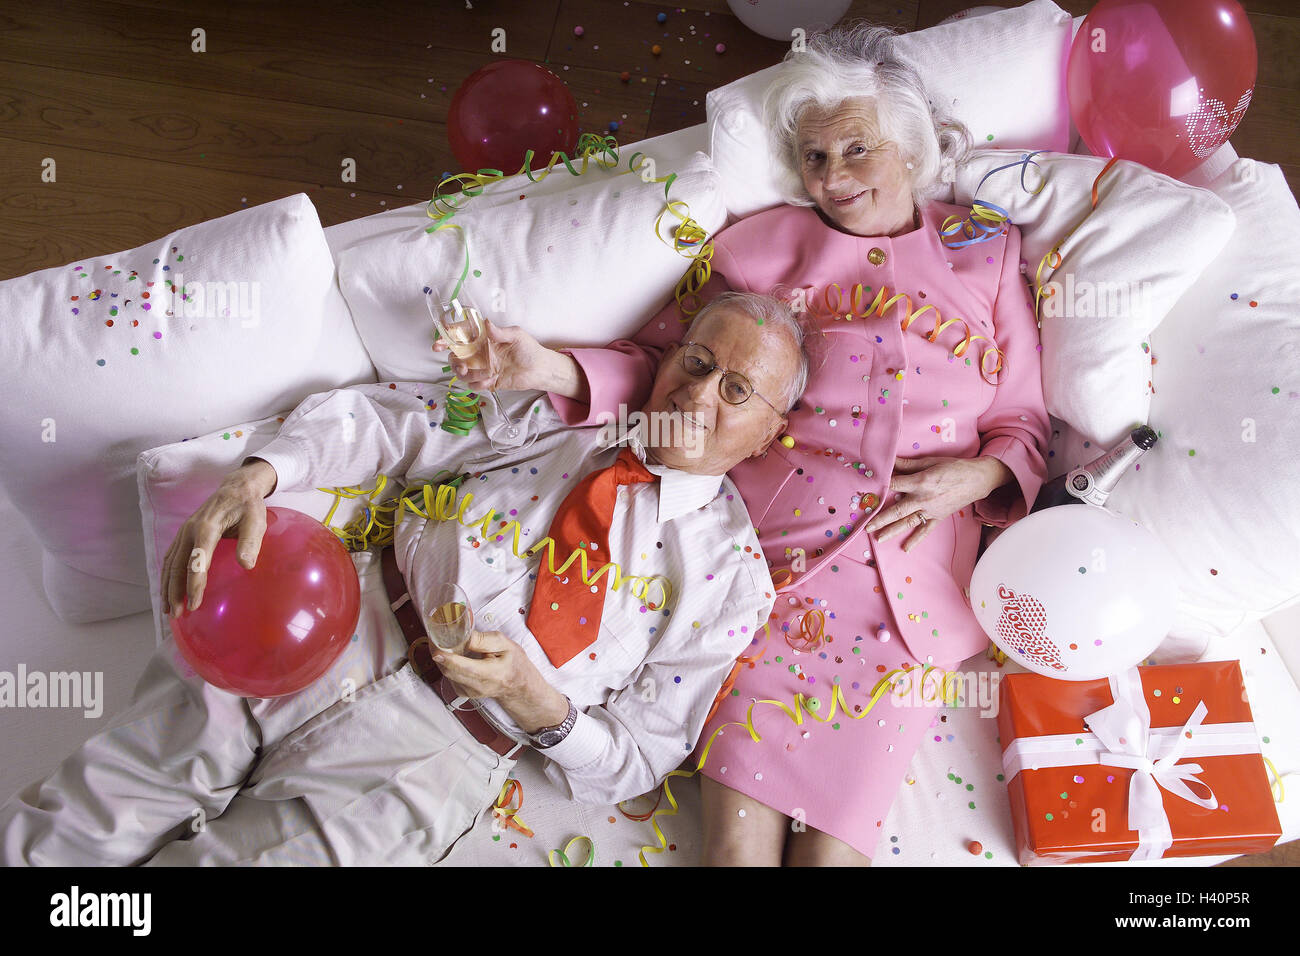 Sofa, senior koppeln, tipsily, Konfetti, Luftballons, Geschenk,  Luftschlangen, von oben paar, Senioren, Rentner, Party, Feier,  Geburtstagsfeier, Feier, feiert zusammen, Beziehung, Partnerschaft, Liebe,  Liebe, verliebt, glücklich, Lächeln, Erschöpfung ...